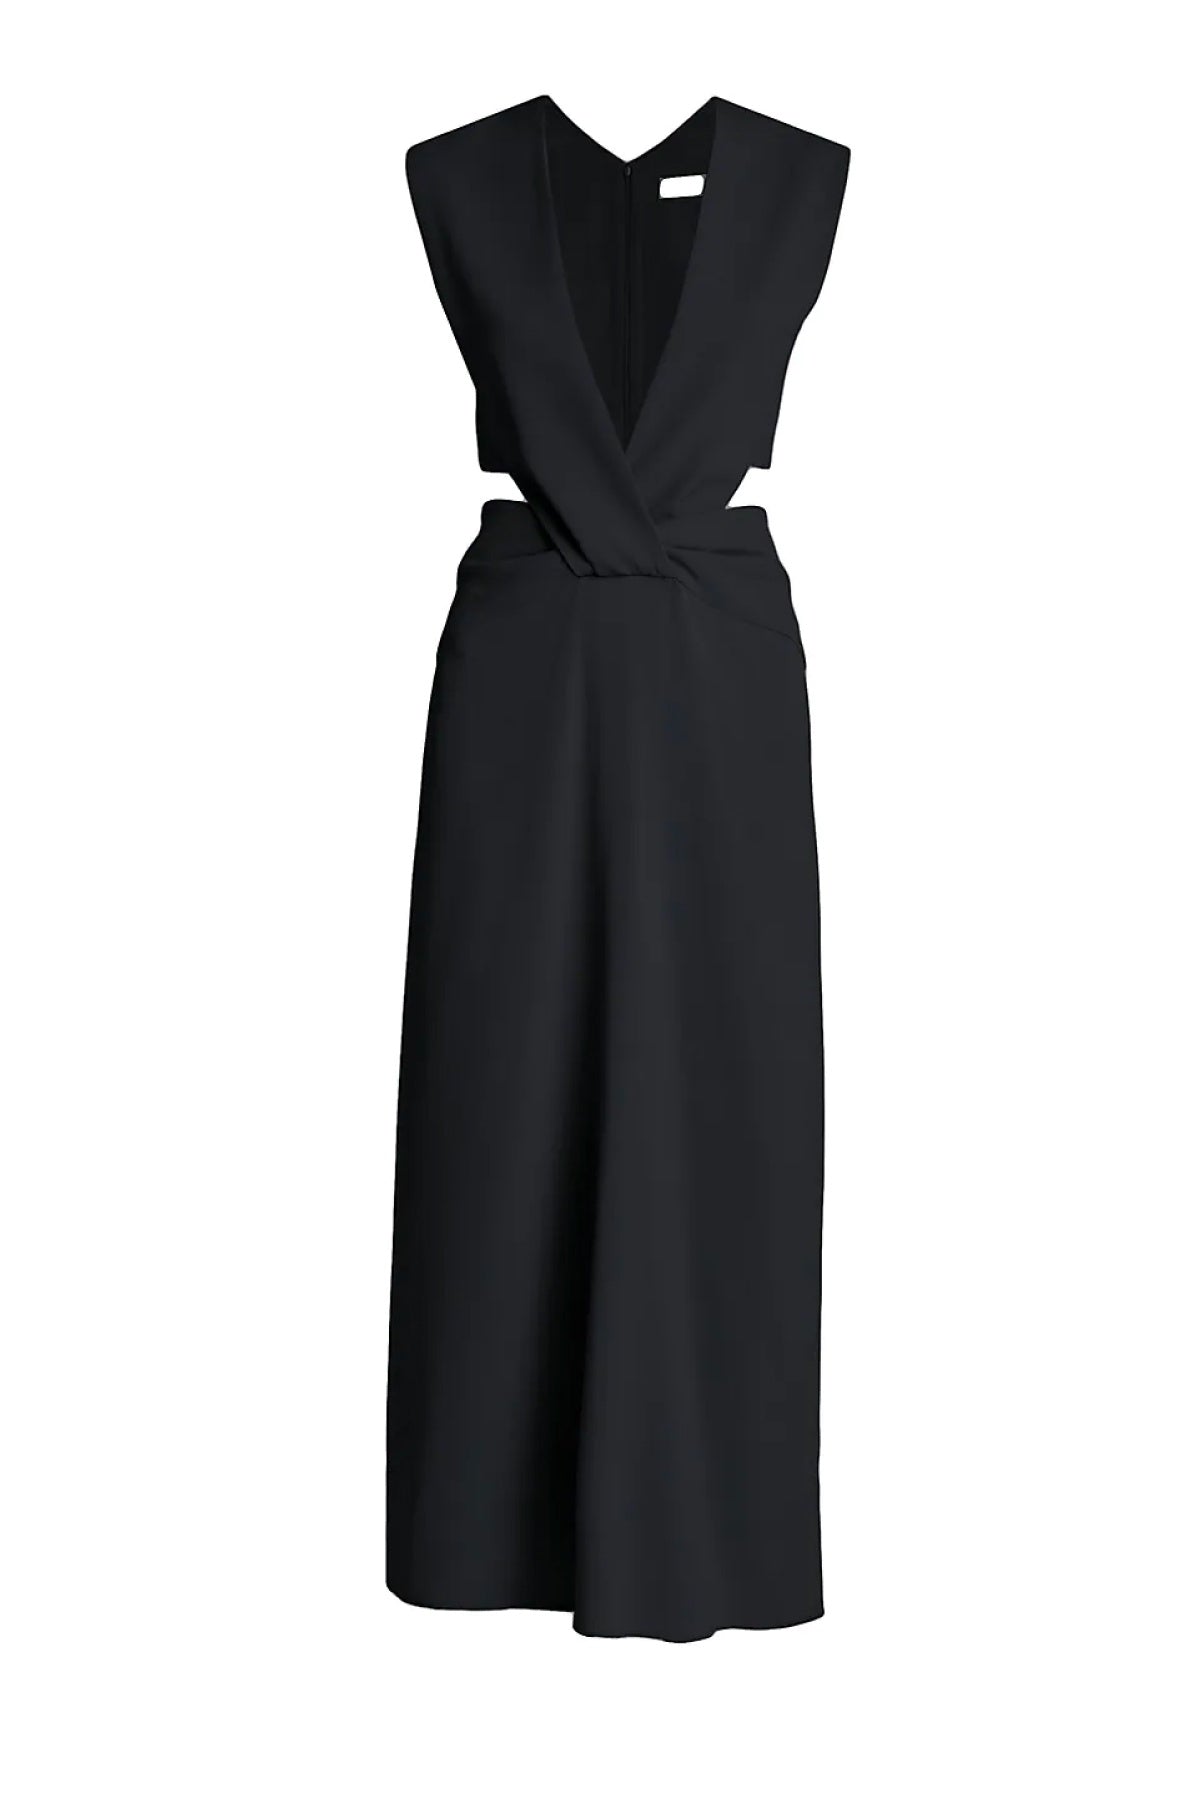 Victoria Beckham Twist Wrap Midi Dress - Black